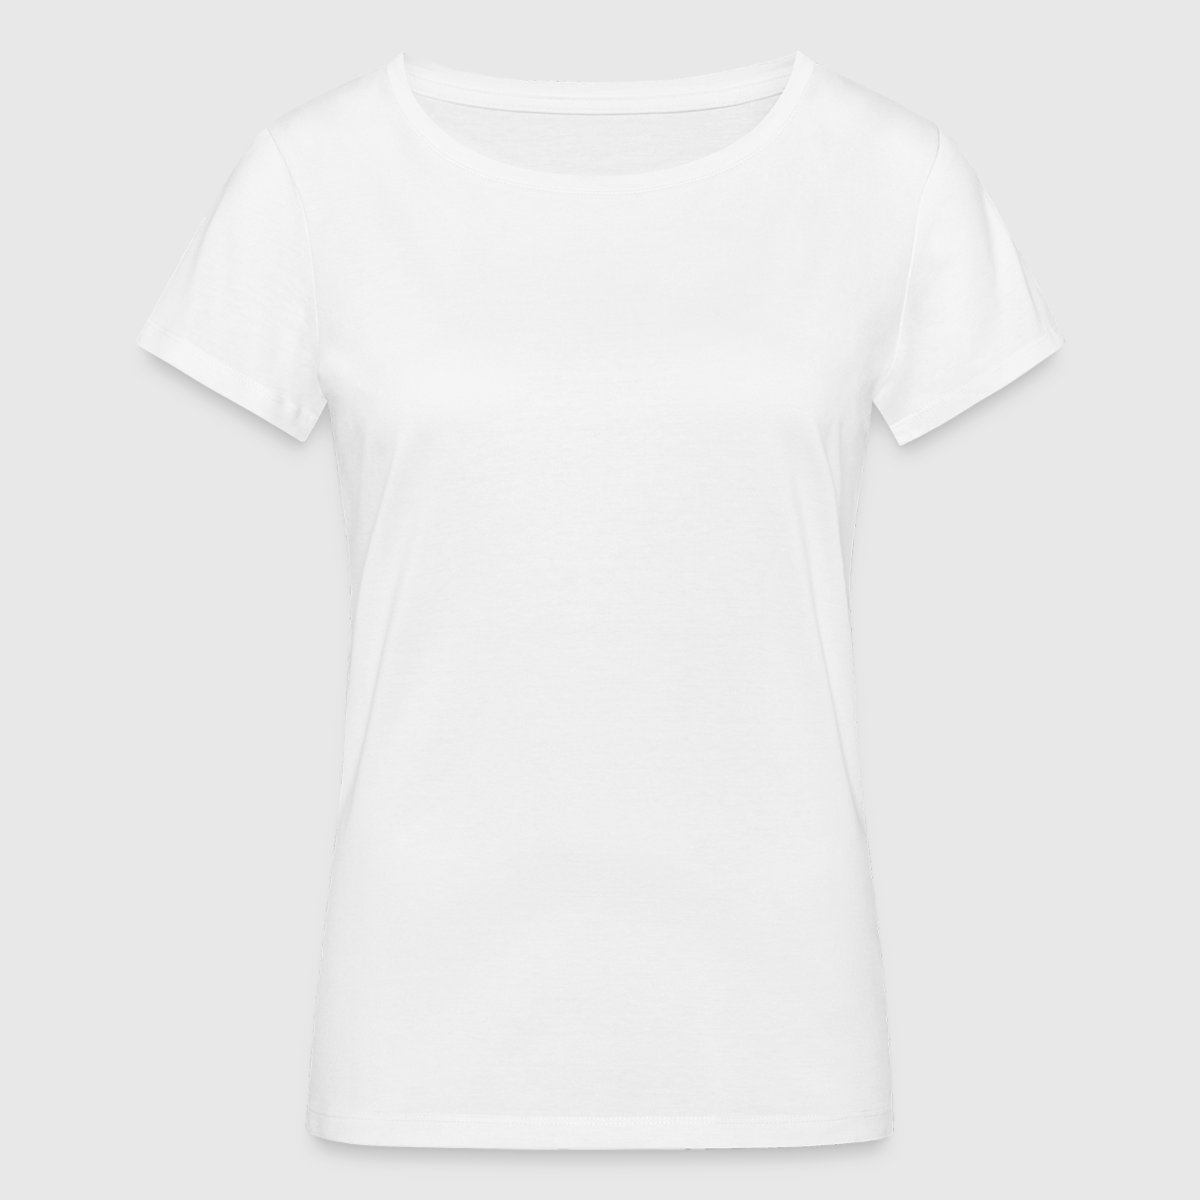 Women's Organic T-Shirt by Stanley & Stella - Front